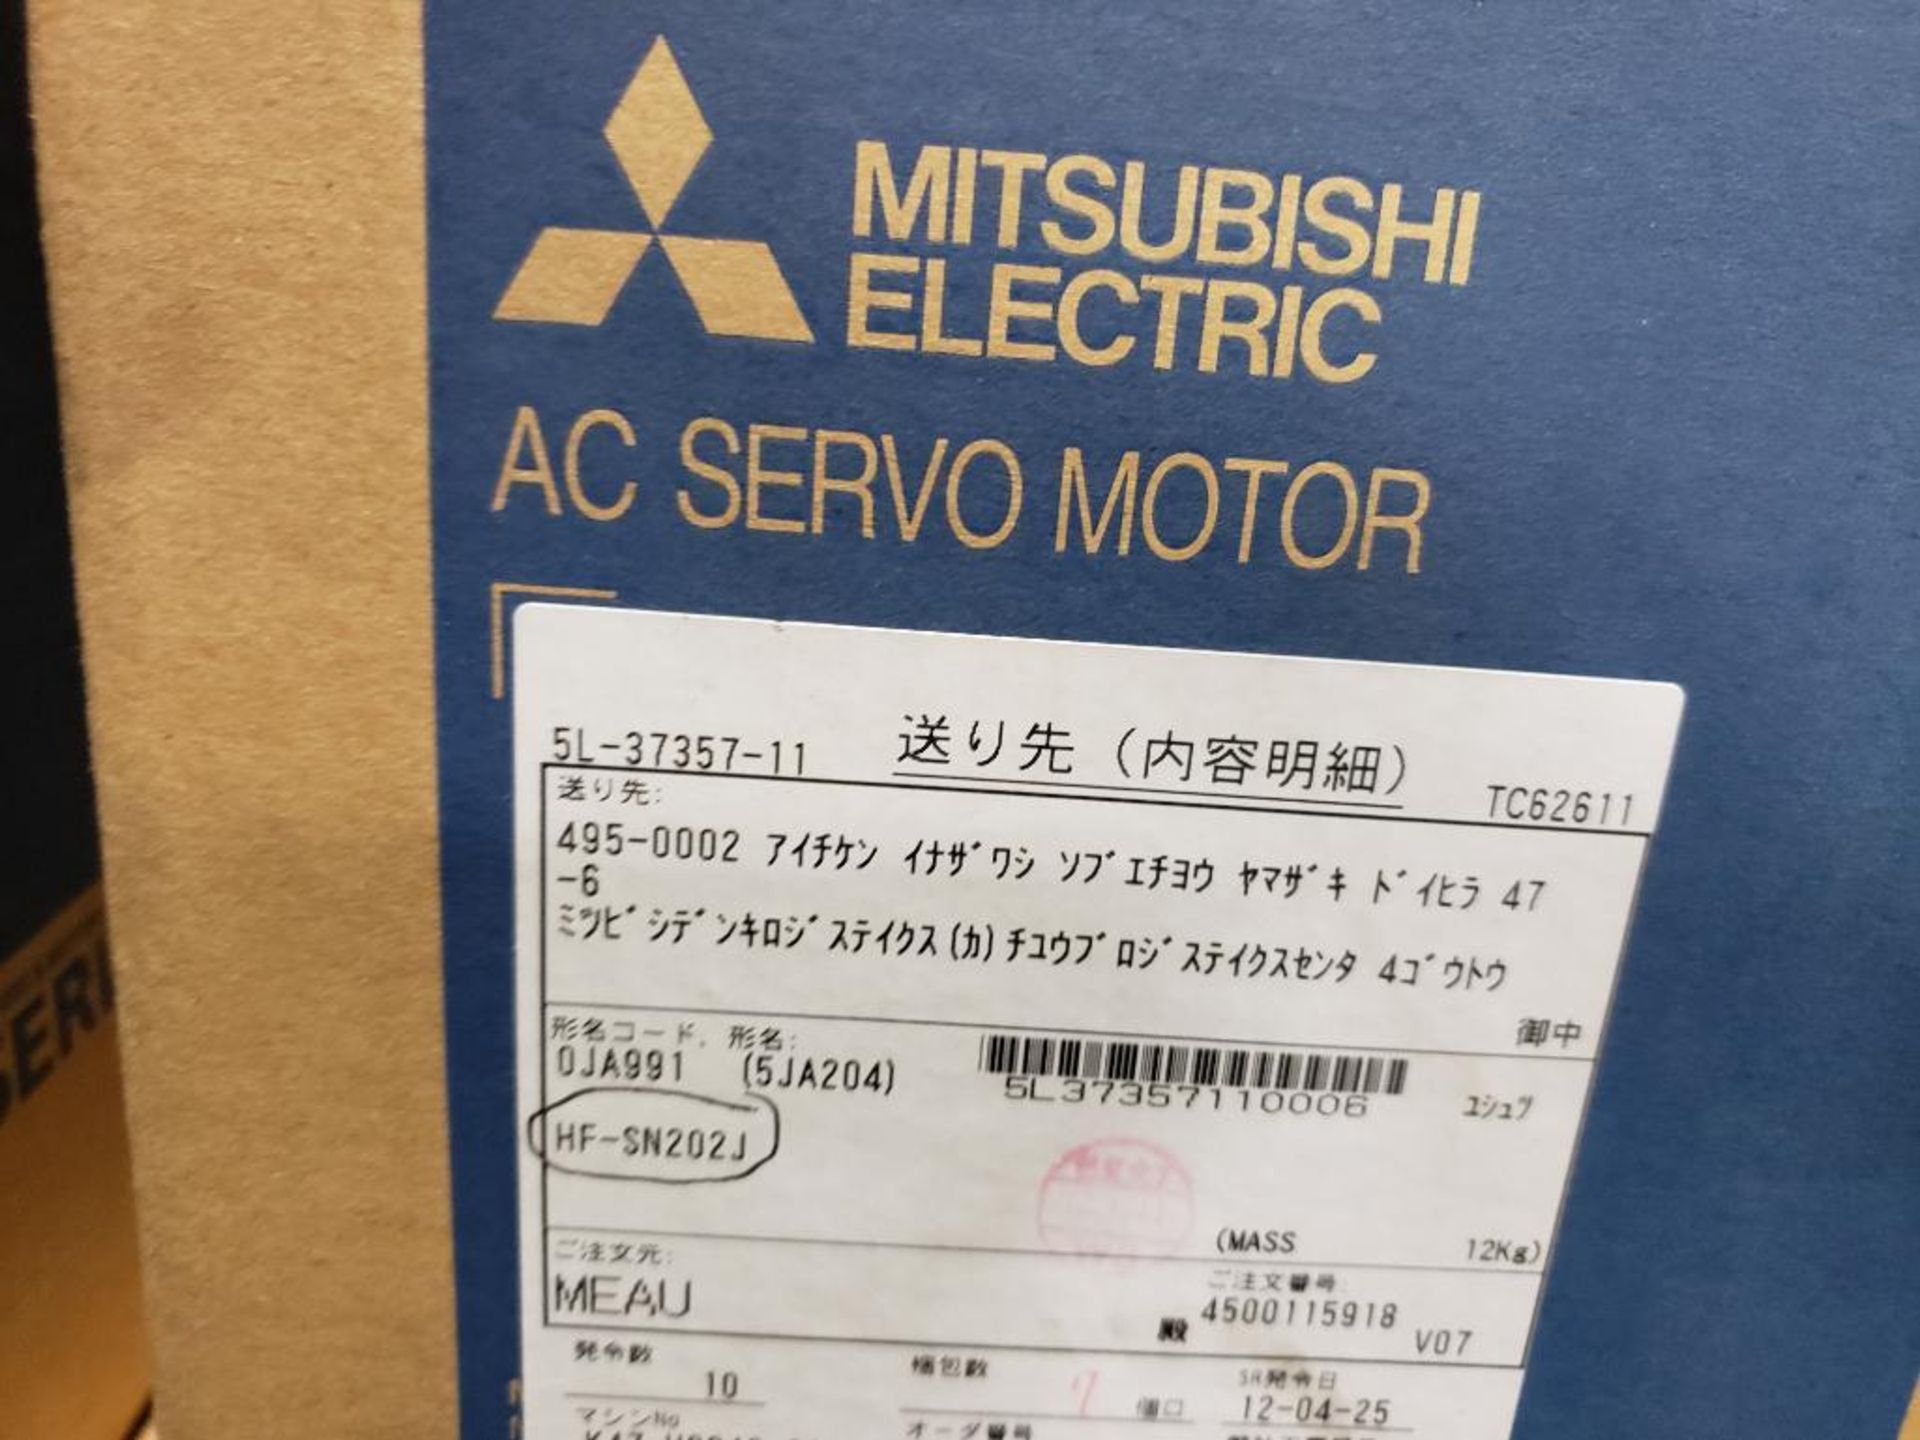 Mitsubishi Electric HF-SN202J AC servo motor. New in box. - Image 3 of 4